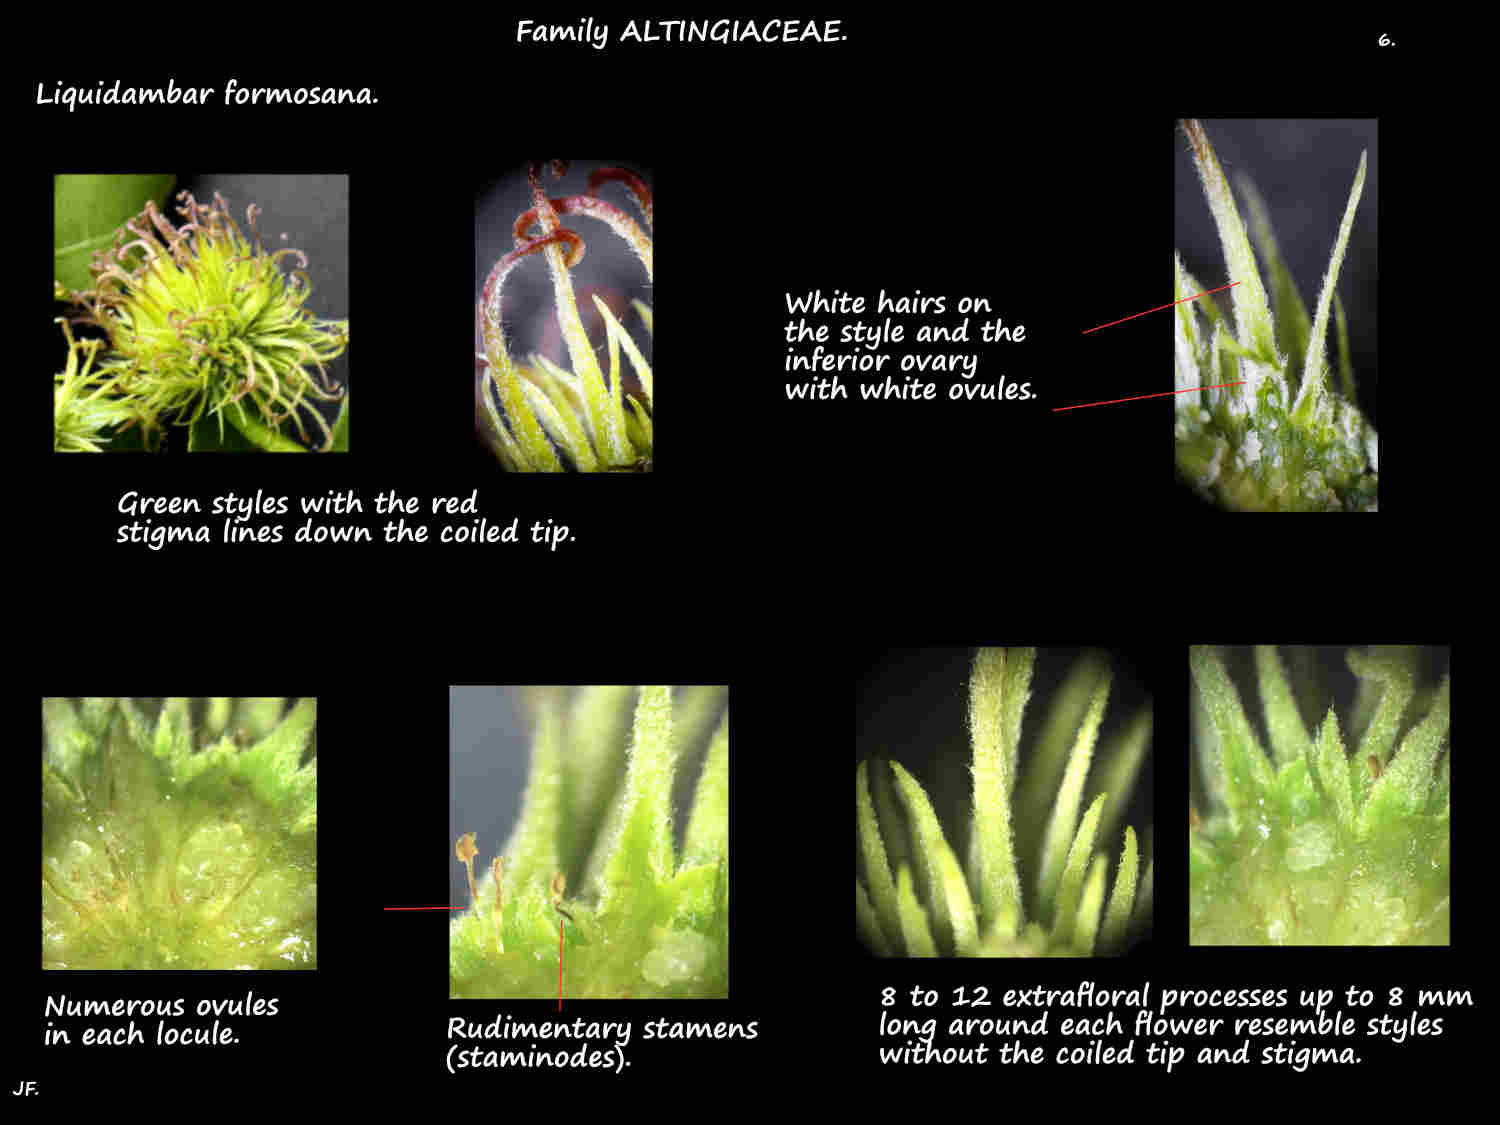 6 Female Liquidambar formosana flowers